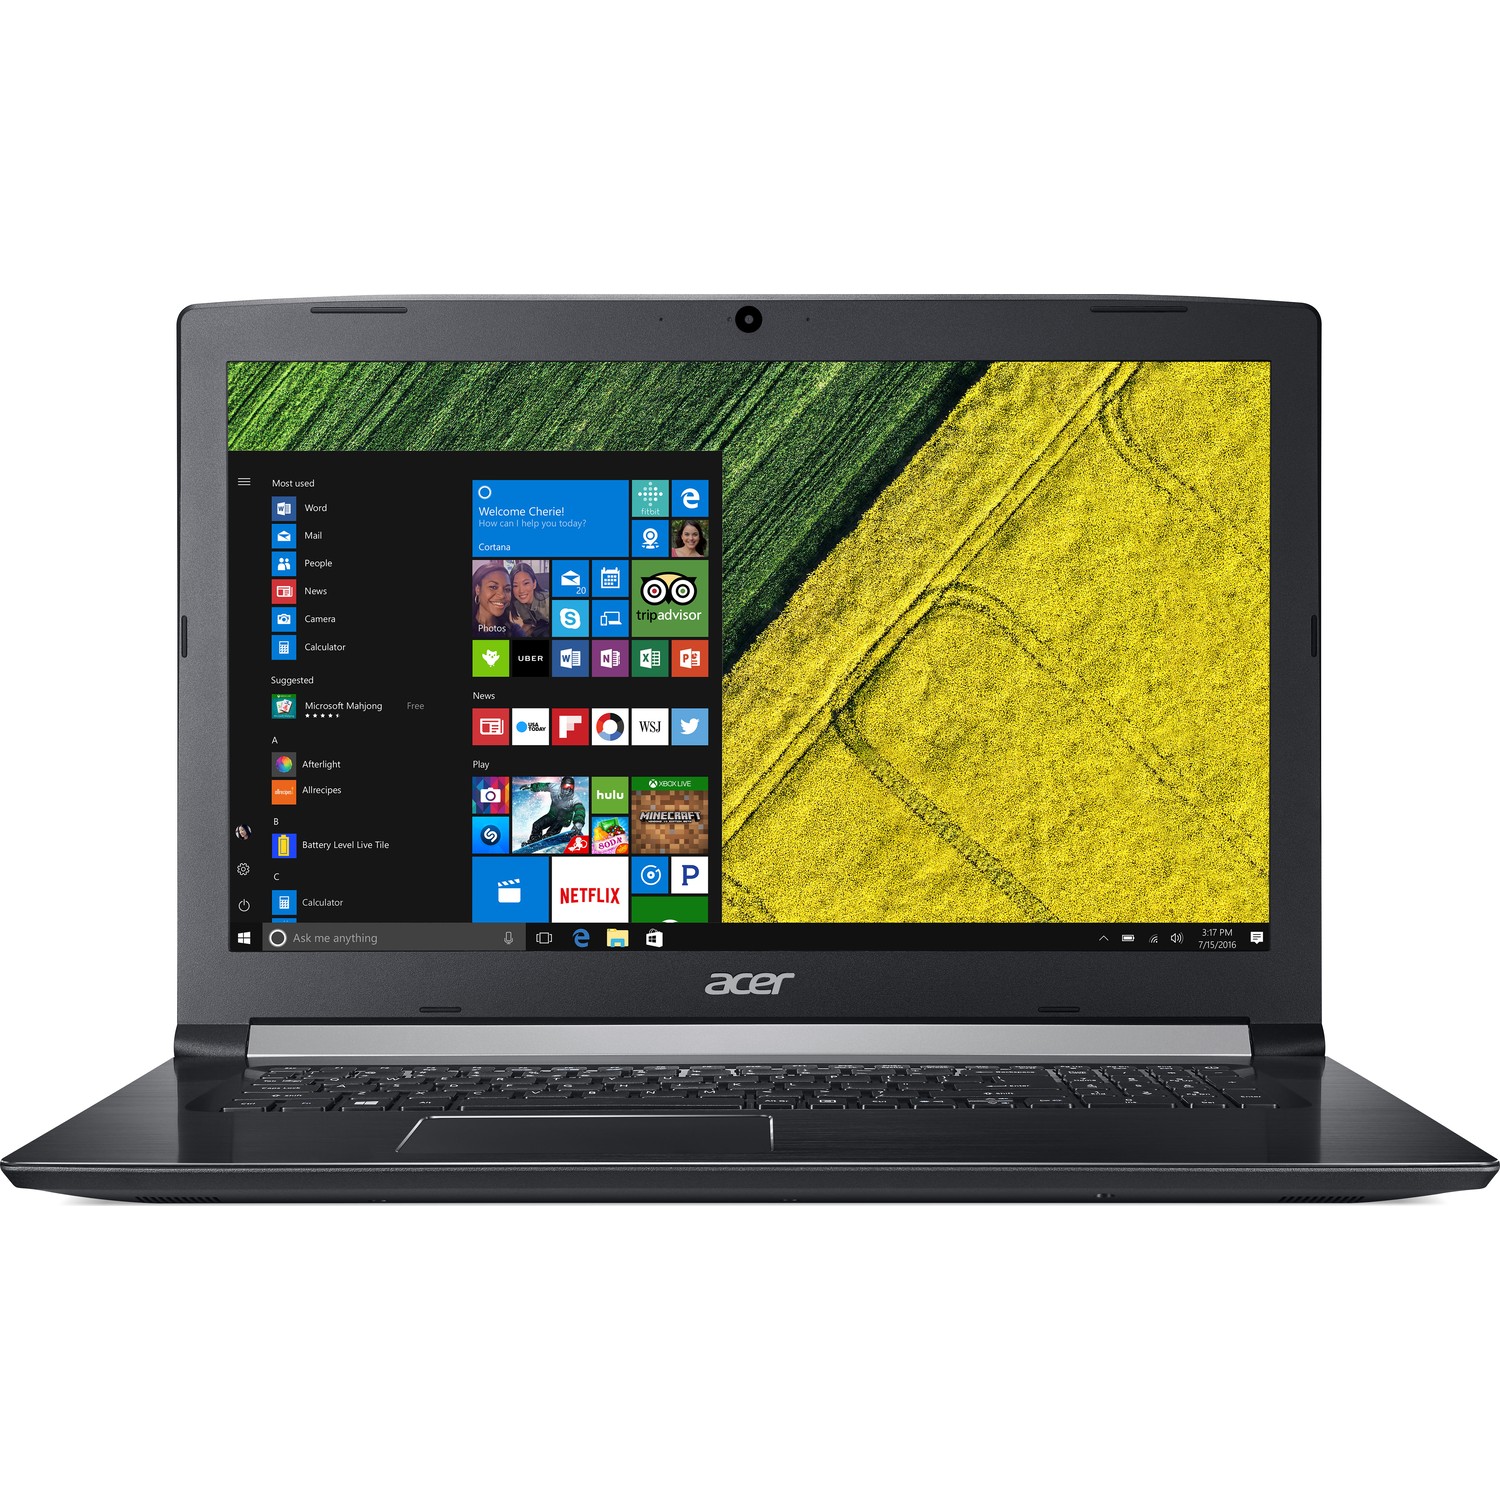 Acer Aspire 5 A517-51 Notebook